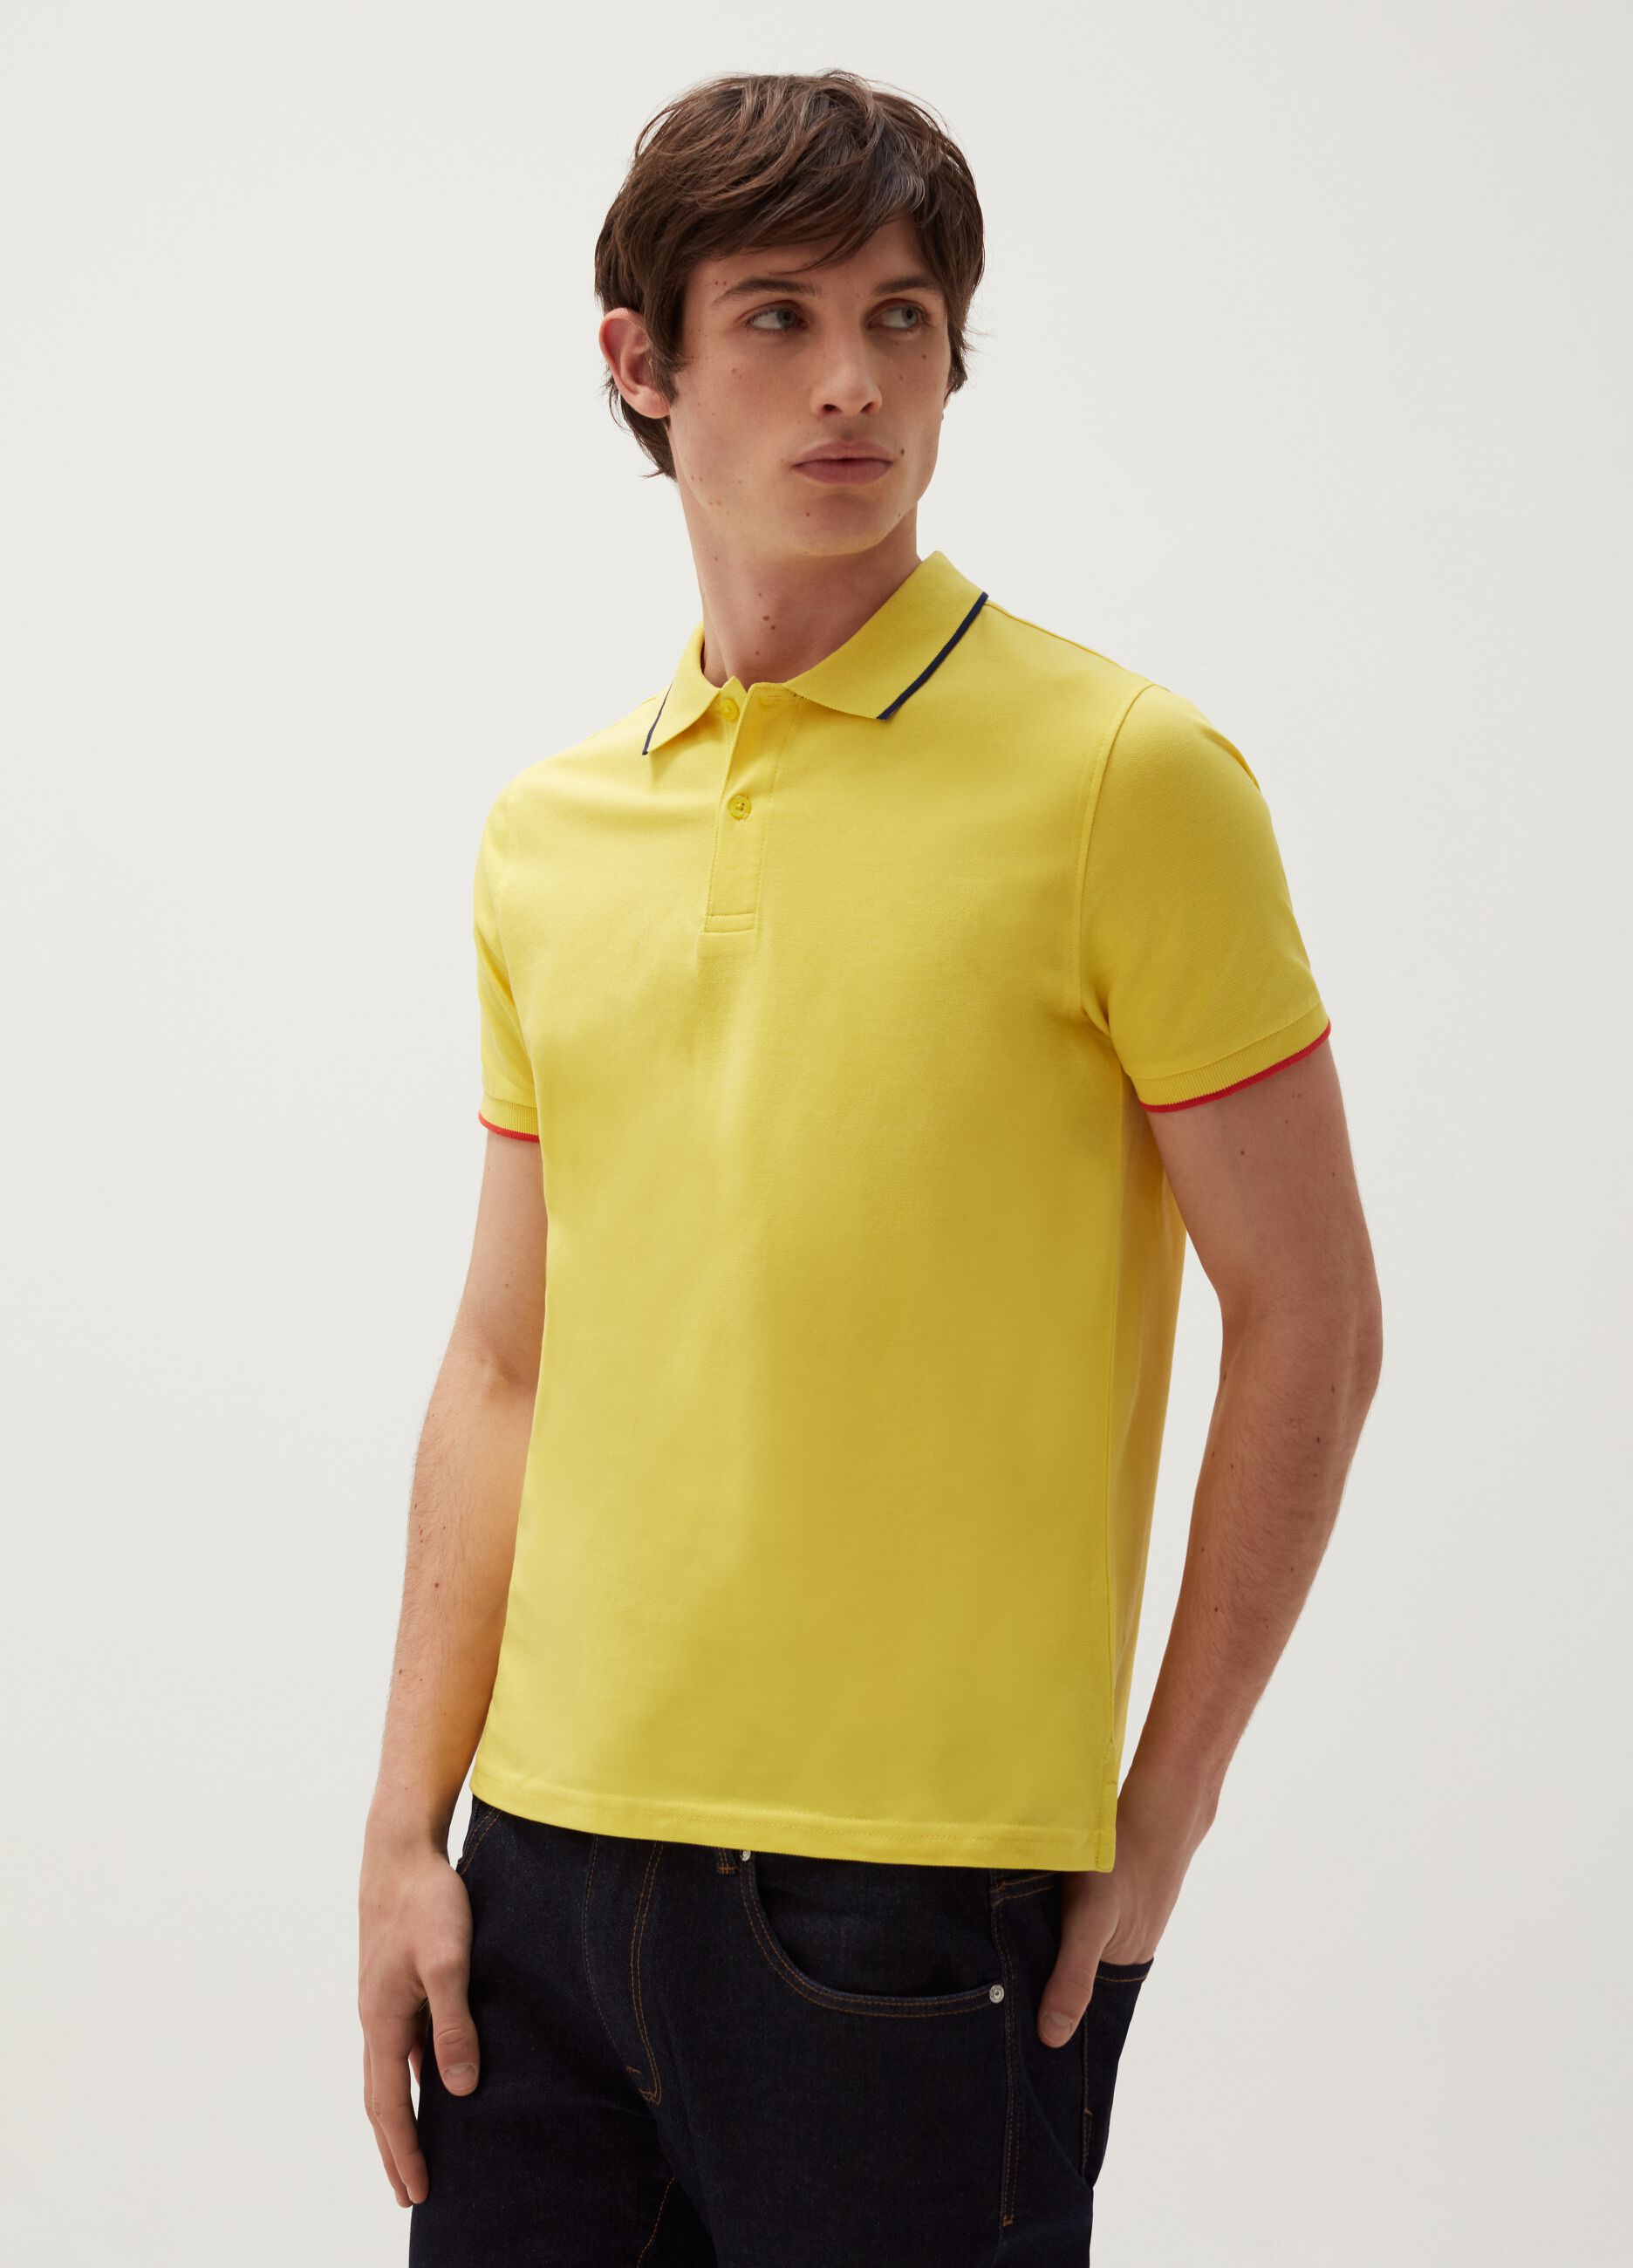 Cotton piquet polo shirt with contrasting trim